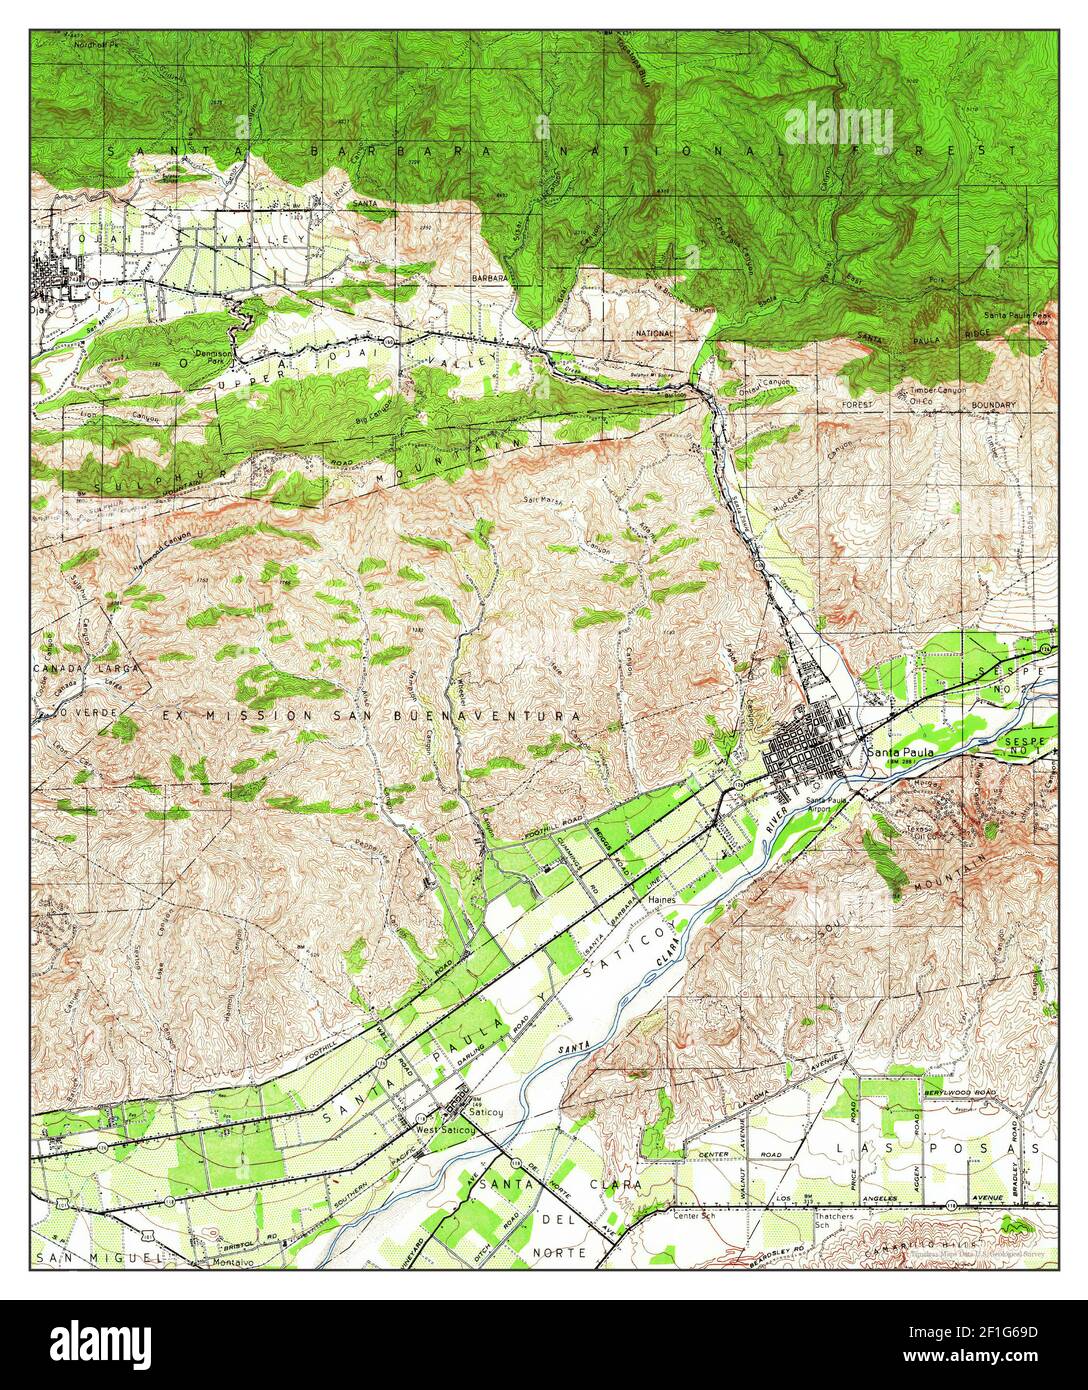 Santa Paula, California, map 1964, 1:62500, United States of America by Timeless Maps, data U.S. Geological Survey Stock Photo